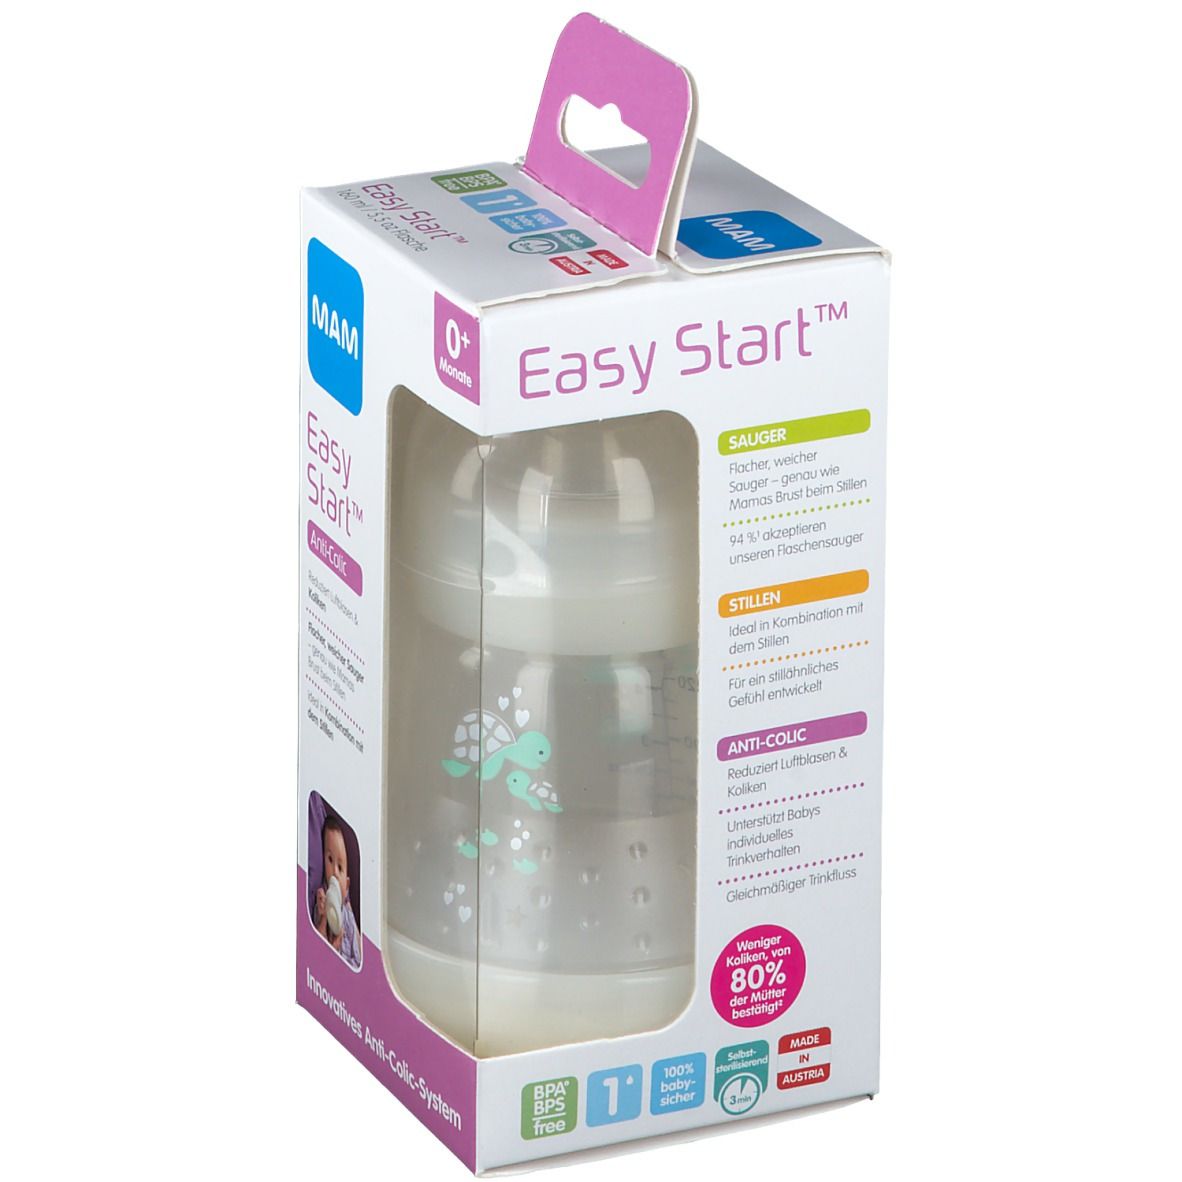 MAM Easy Start Anti-Colik Babyflasche 160ml mit MAM Silikonsauger 1, ab 0 Monate